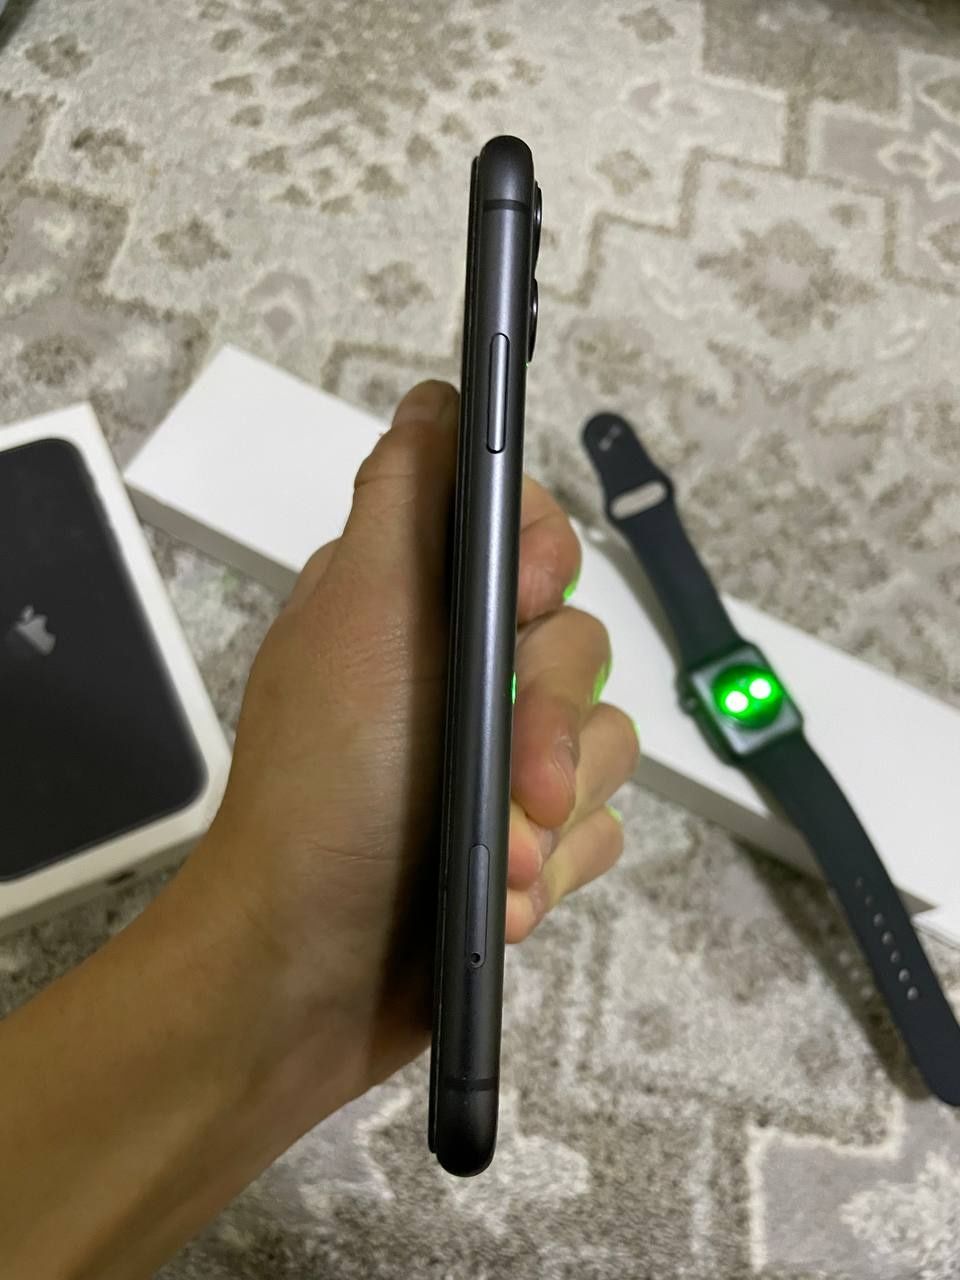 Iphone 11 + apple watch 3 series